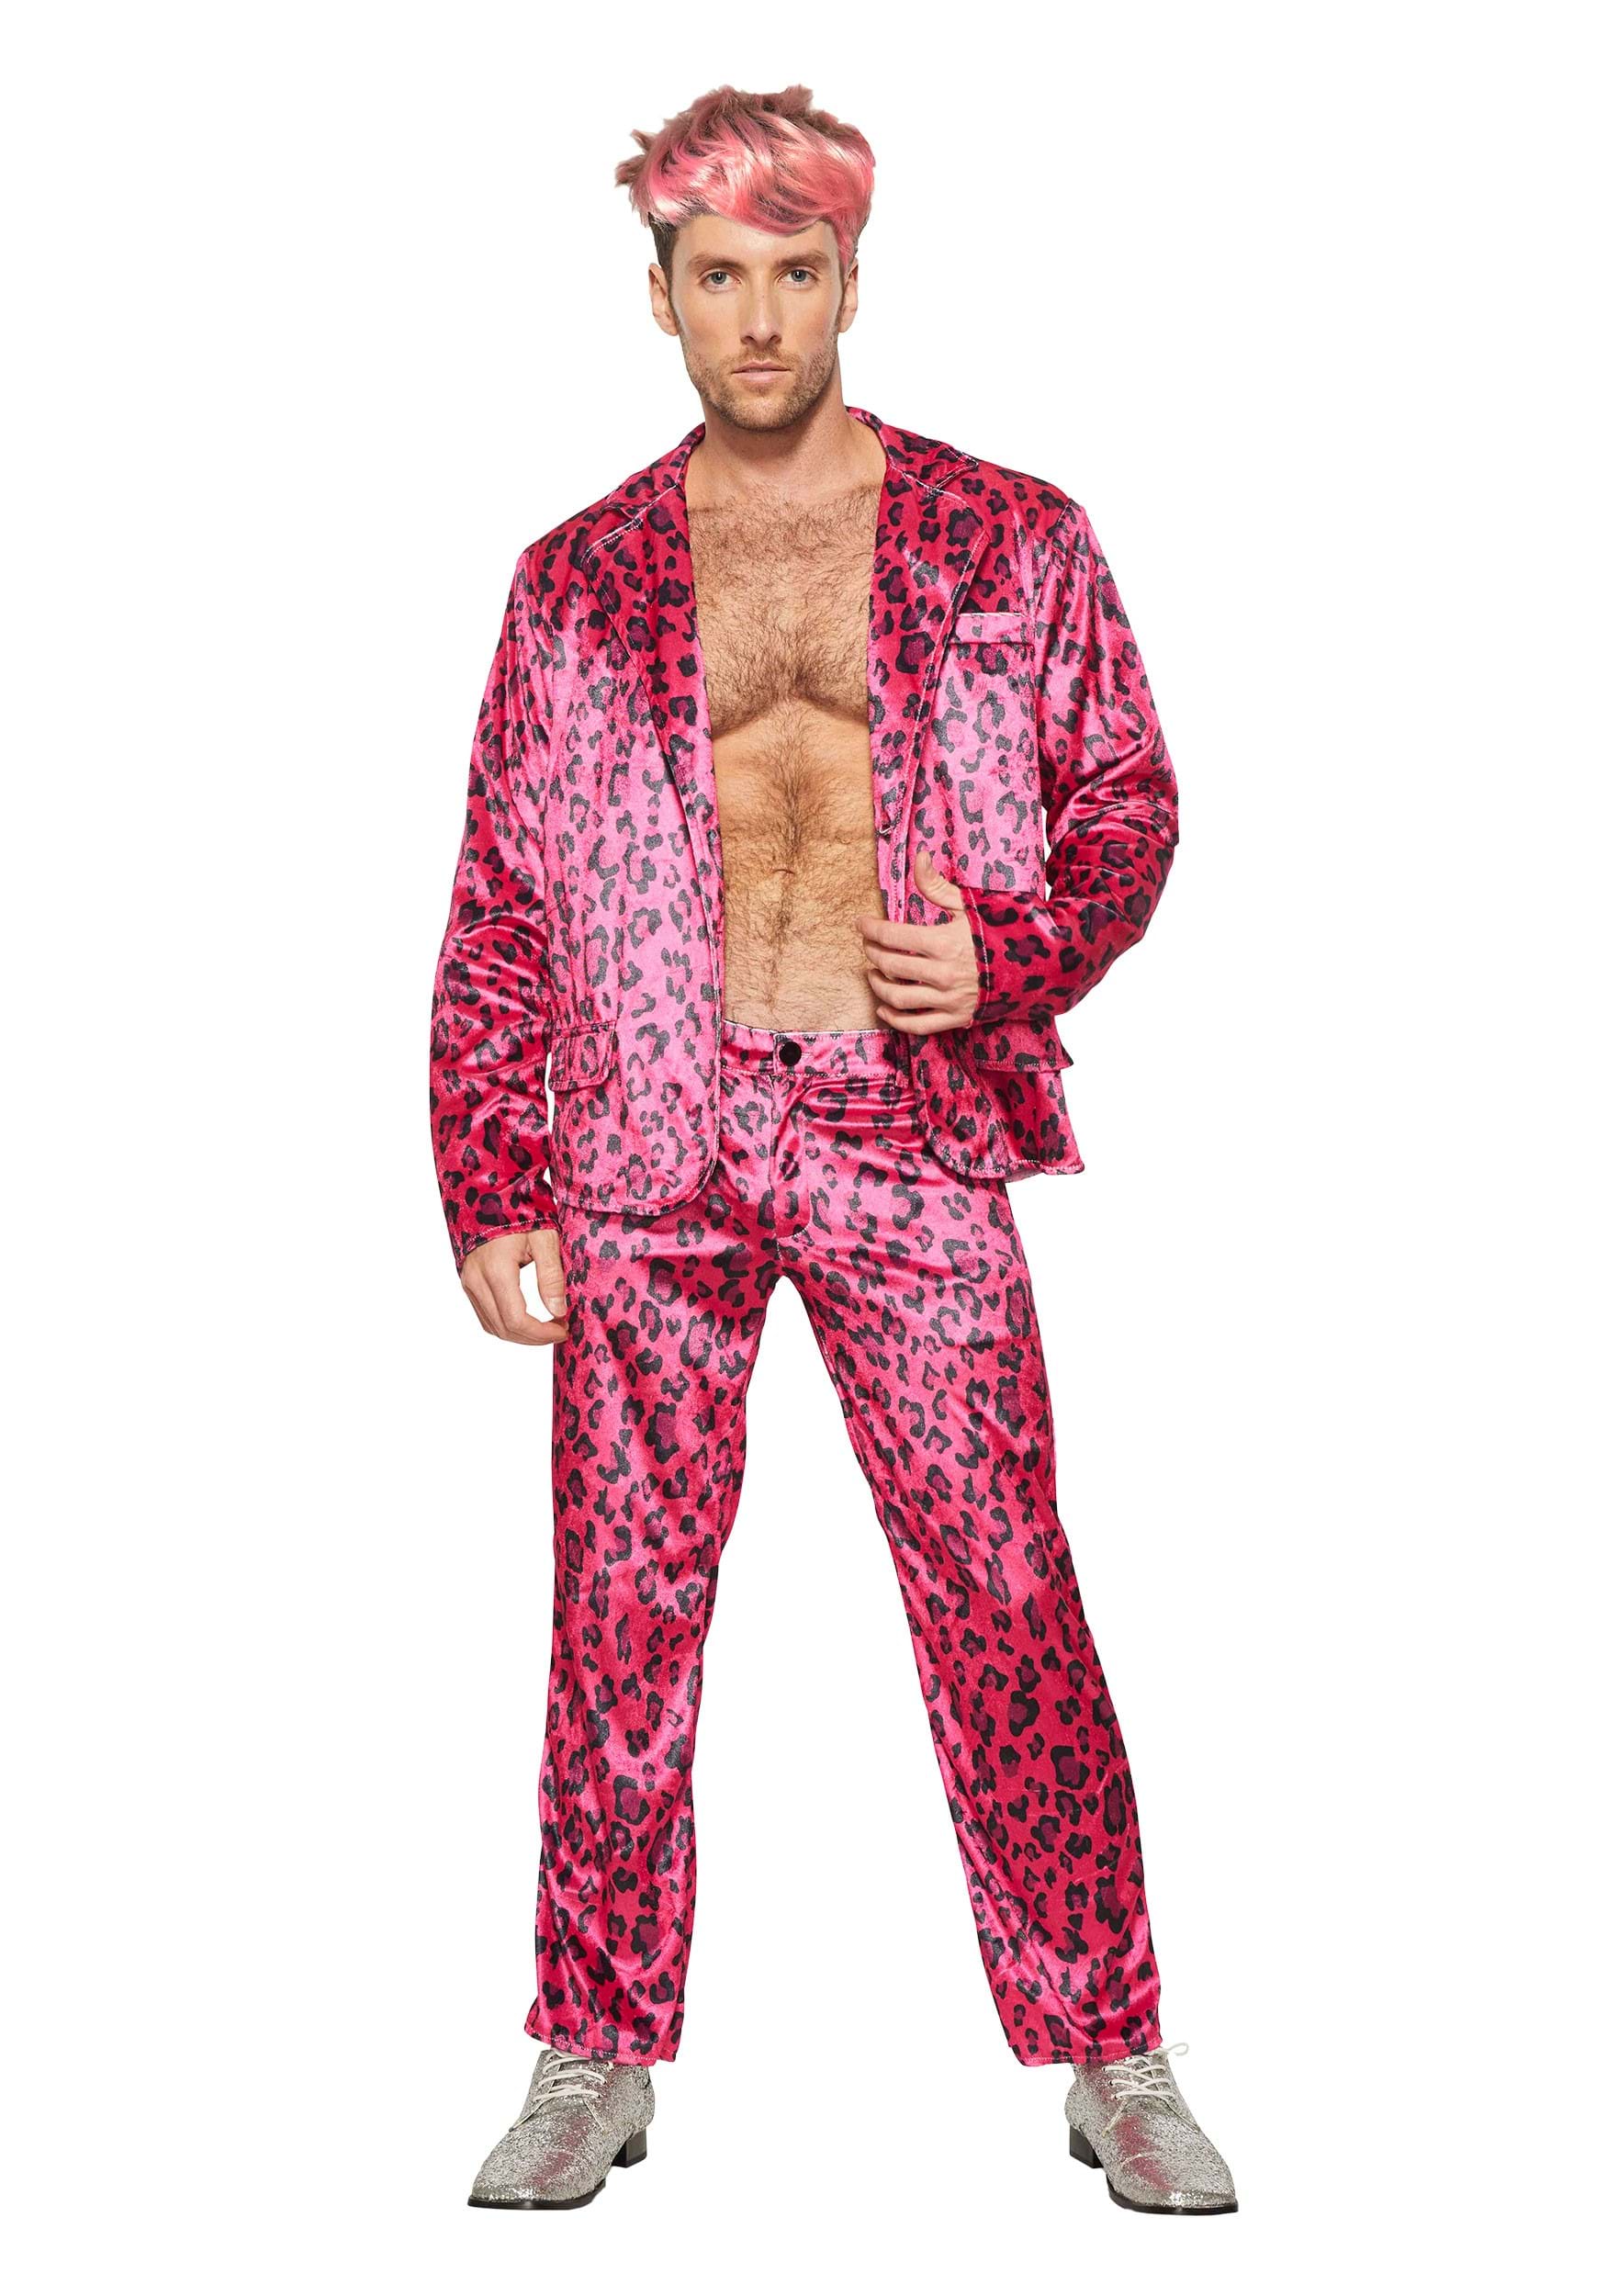 Image of Pink Leopard Rock Star Men's Costume | Celebrity Costumes ID SG80203P-L/XL